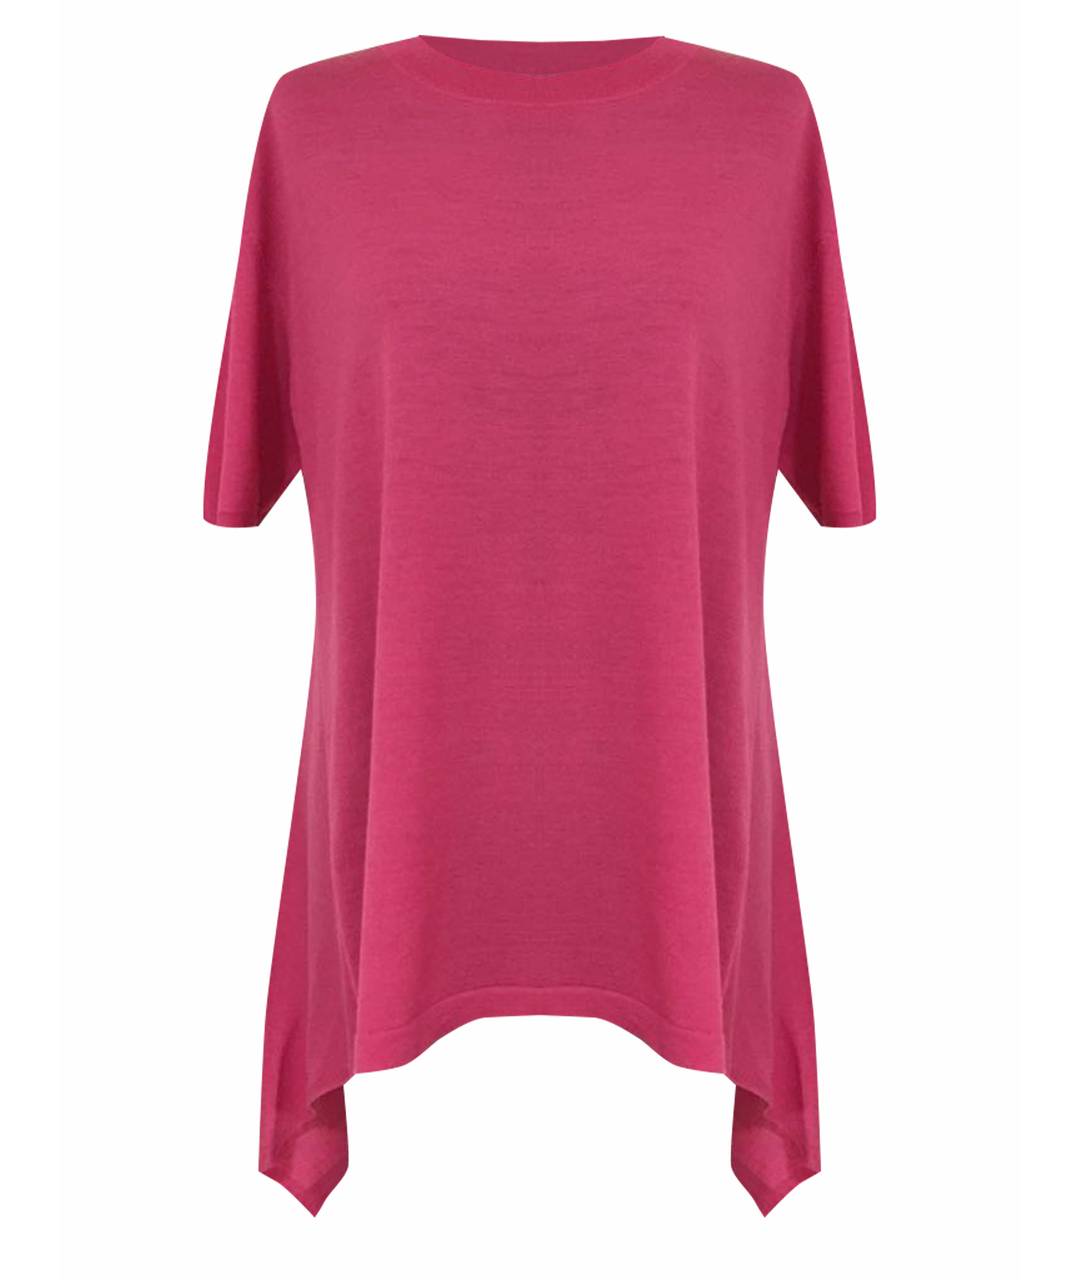 MOSCHINO Розовый шерстяной джемпер / свитер, фото 1